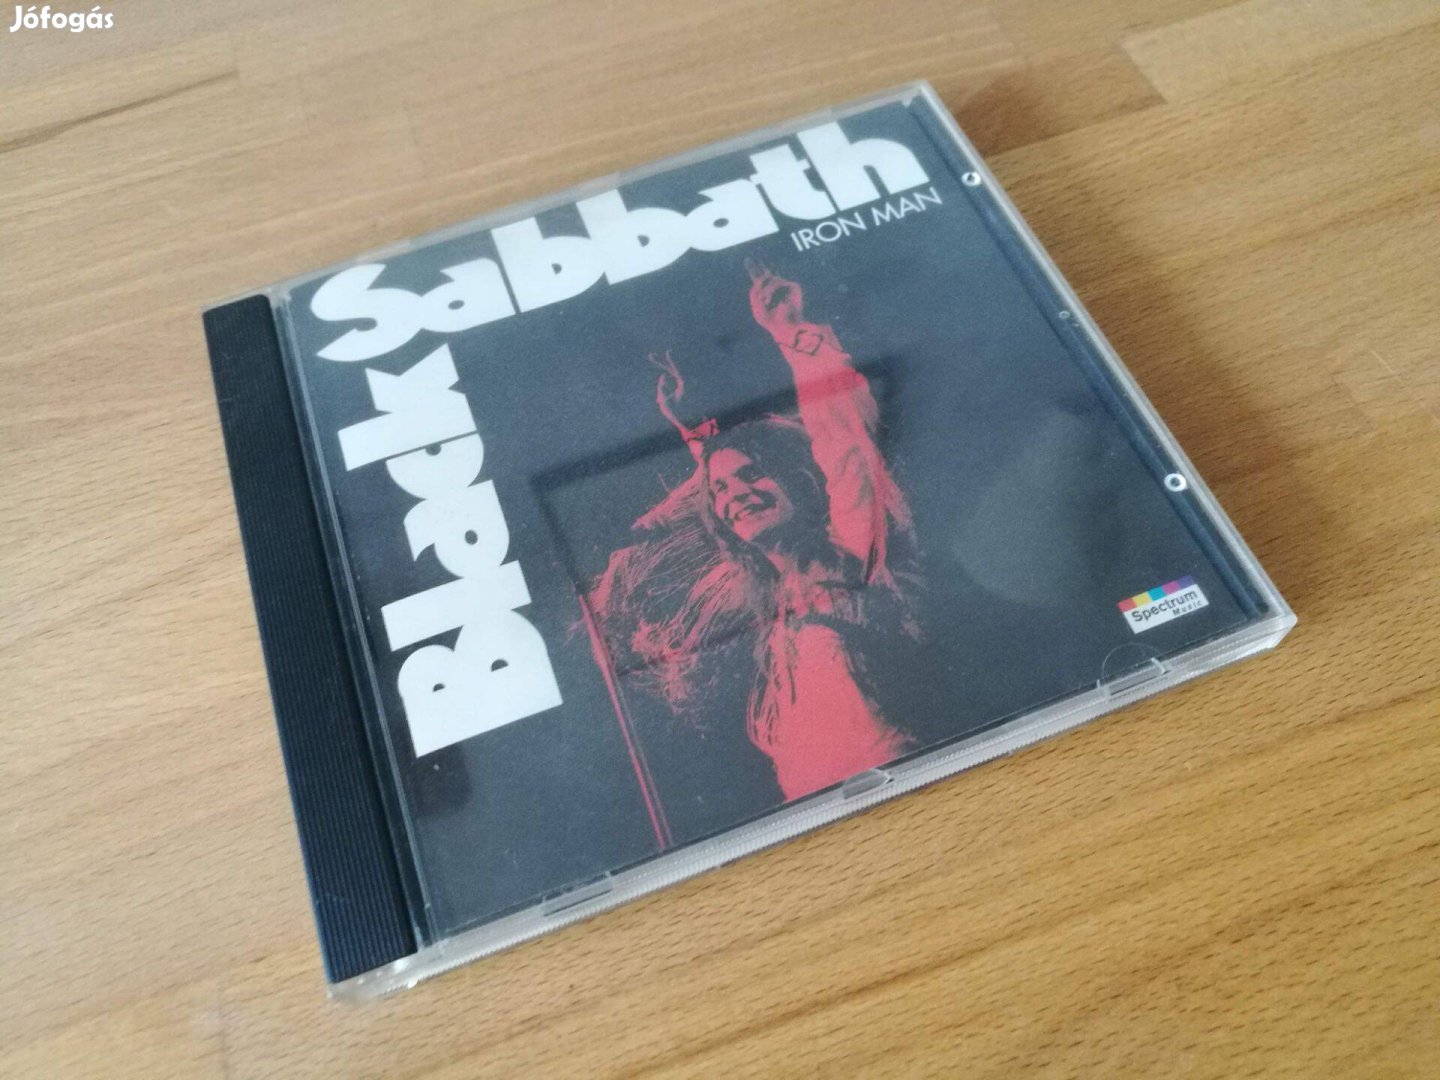 Black Sabbath - Iron man (Spectrum Music, Germany, 1994, CD)